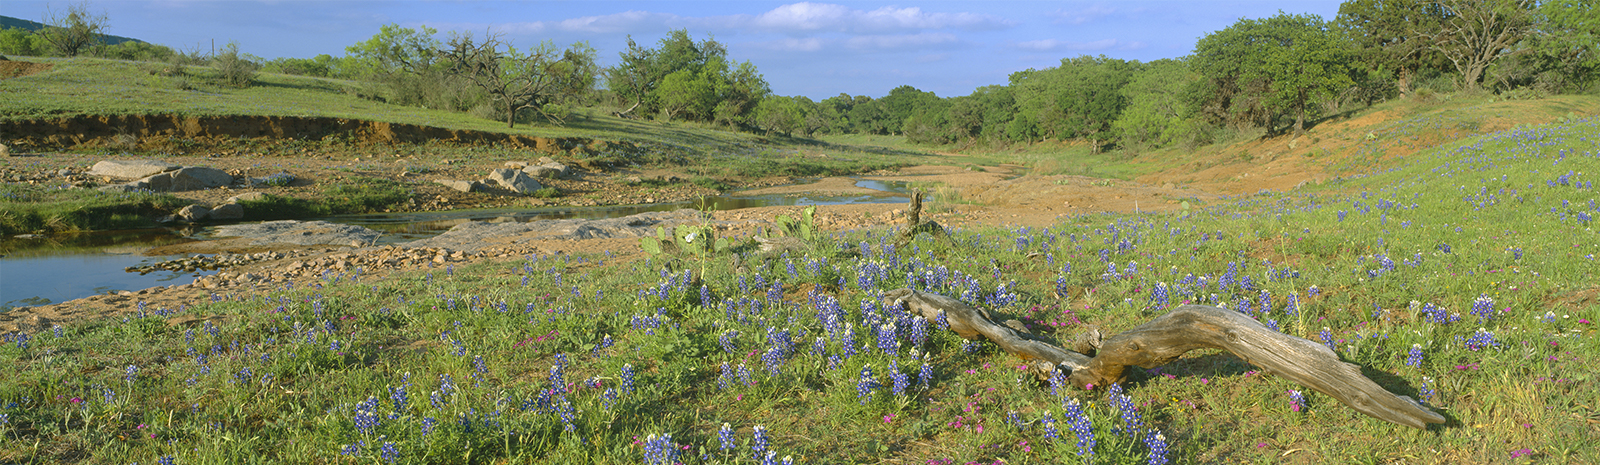 Portrait Shot Of Texas Hill Country Landscape